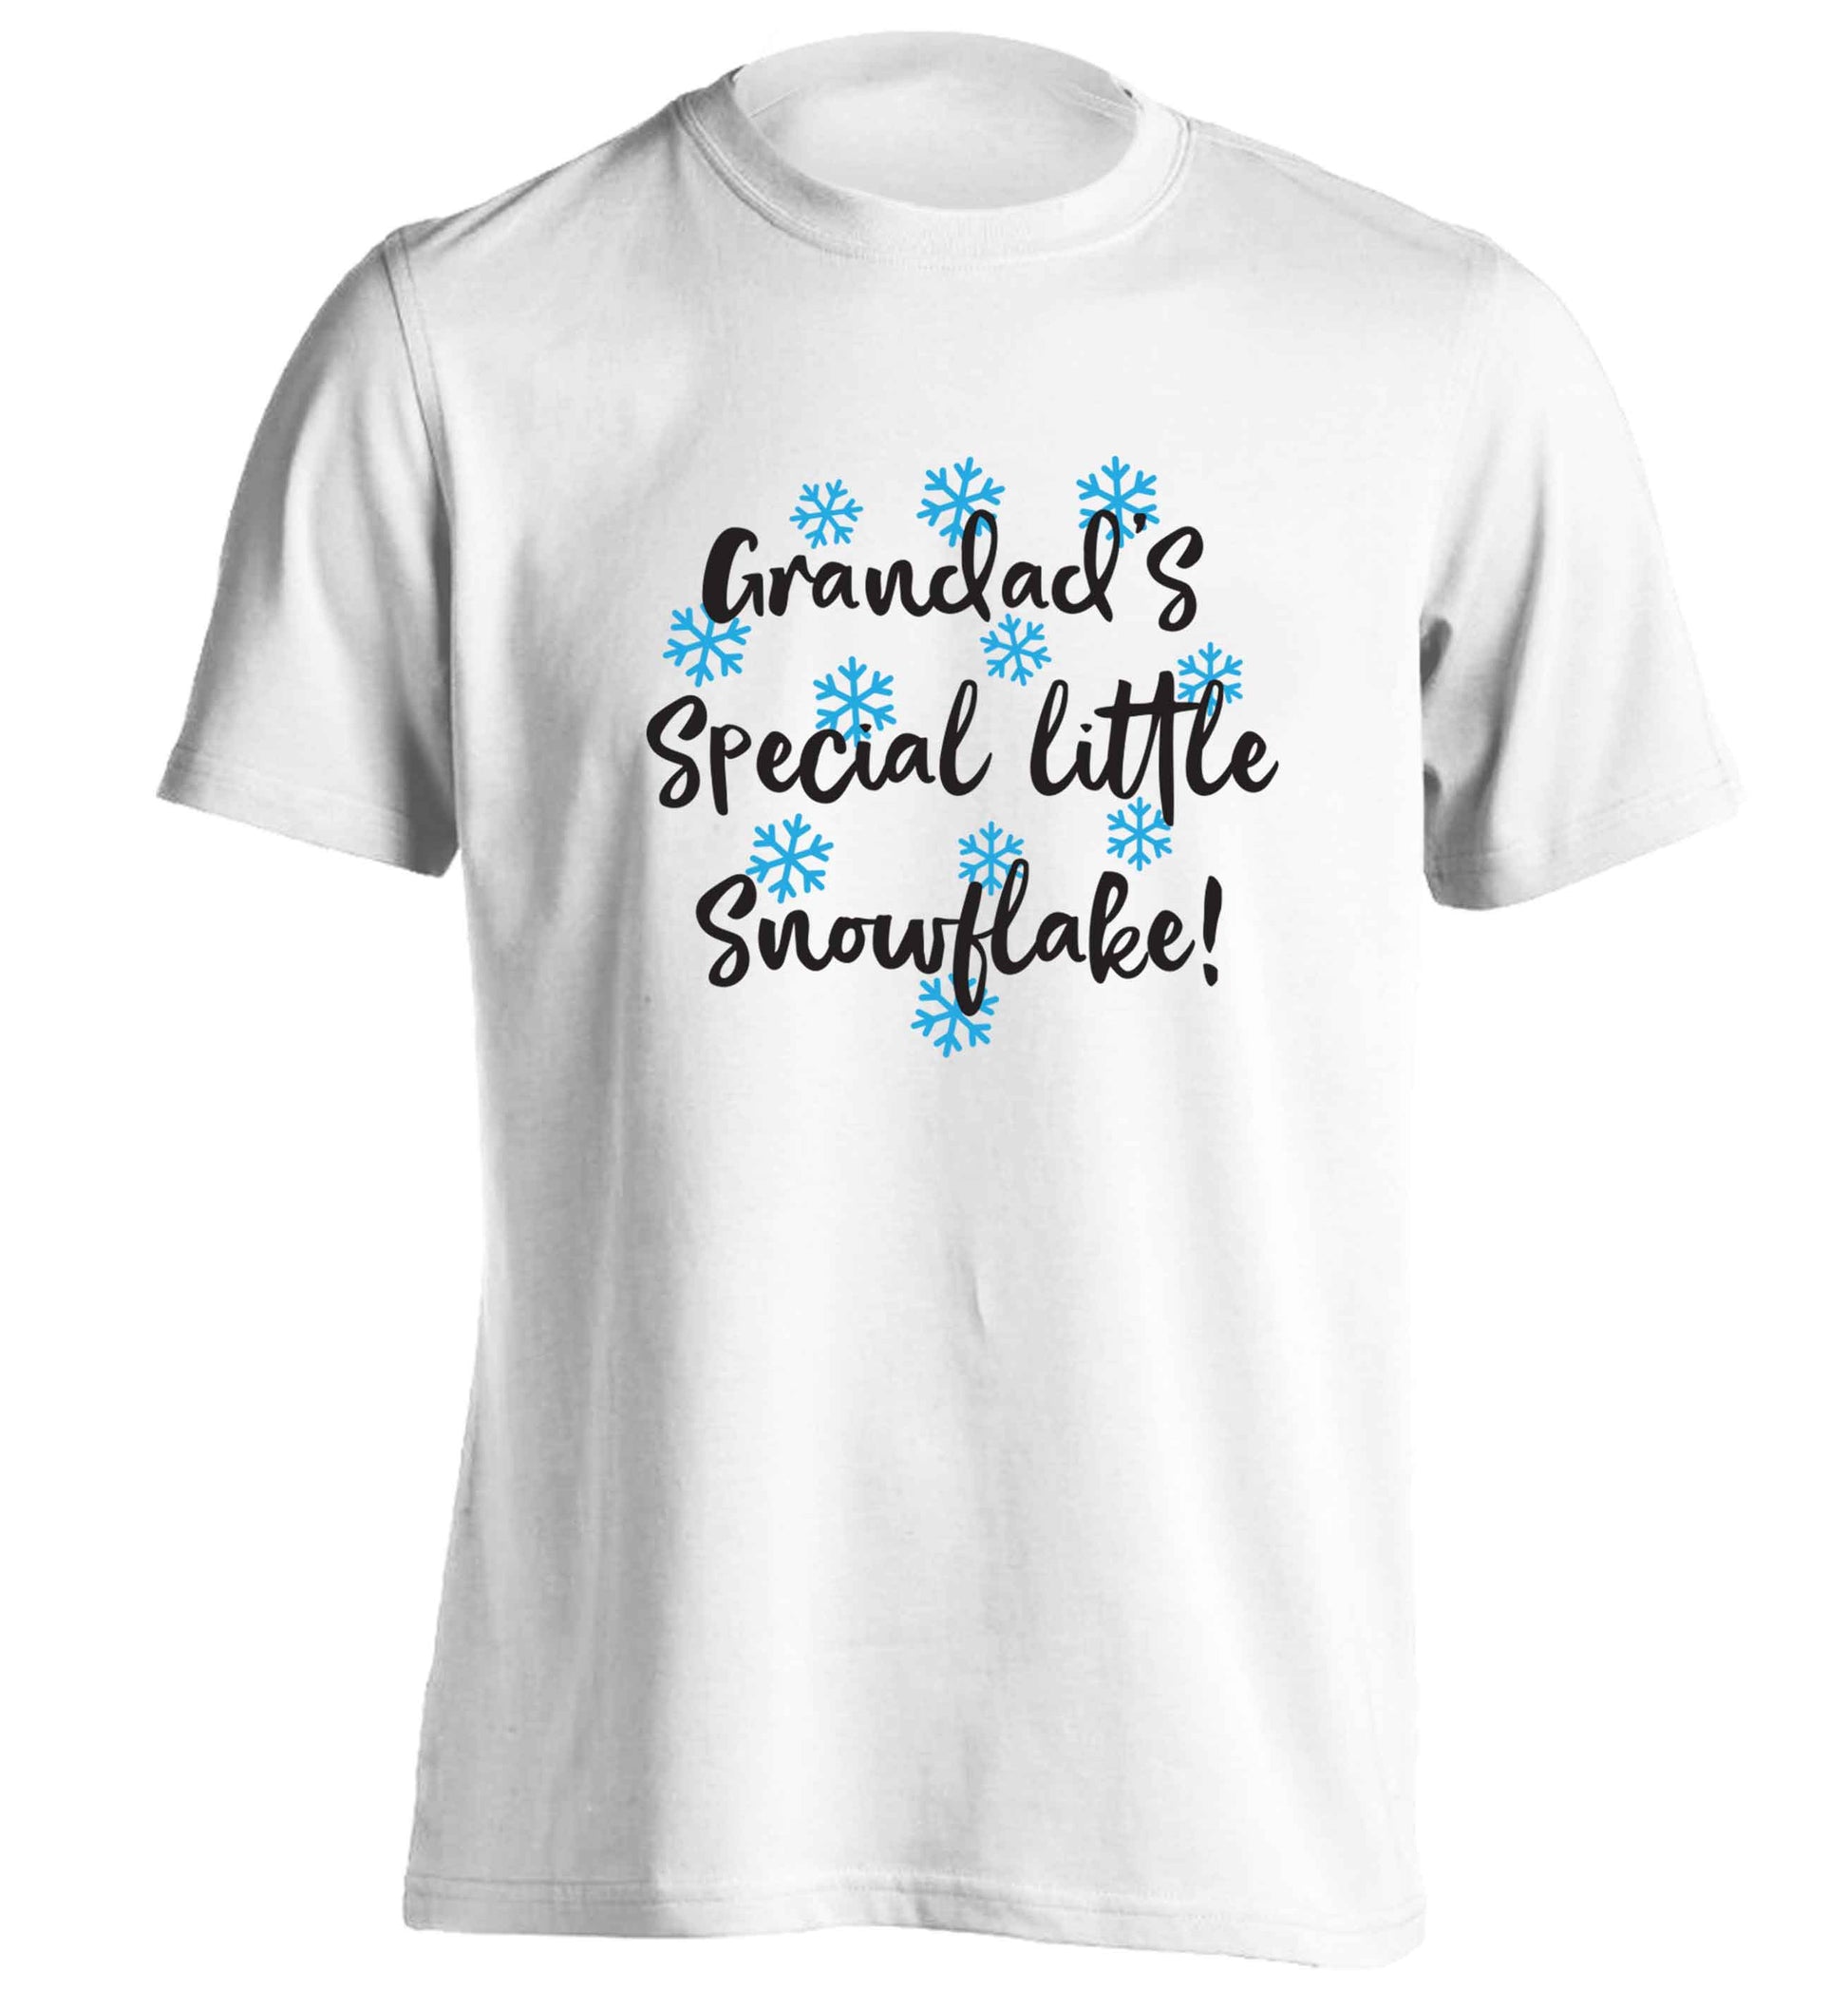 Grandad's special little snowflake adults unisex white Tshirt 2XL